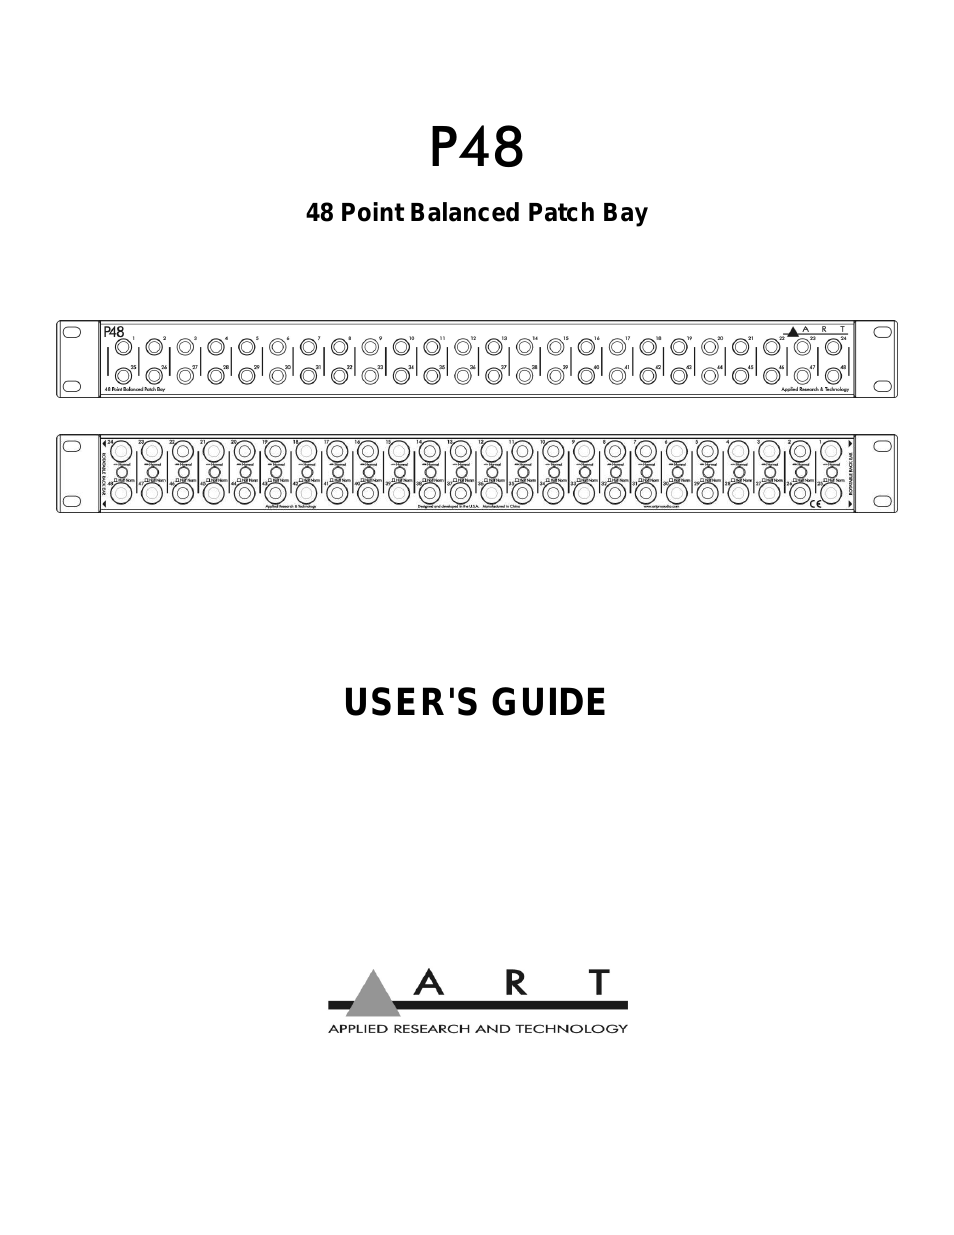 P48 - 48 Point Balanced Patch Bay